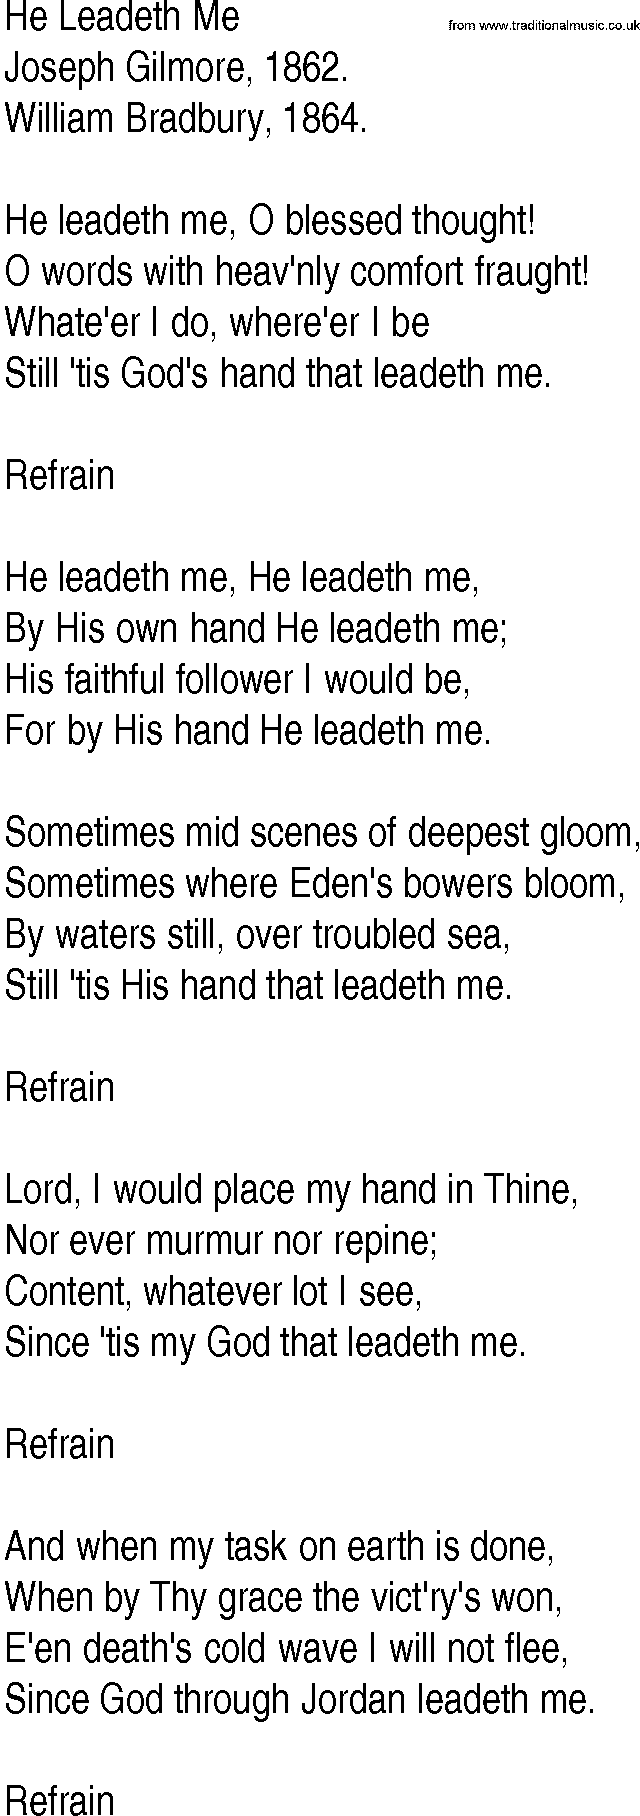 Hymn and Gospel Song: He Leadeth Me by Joseph Gilmore lyrics